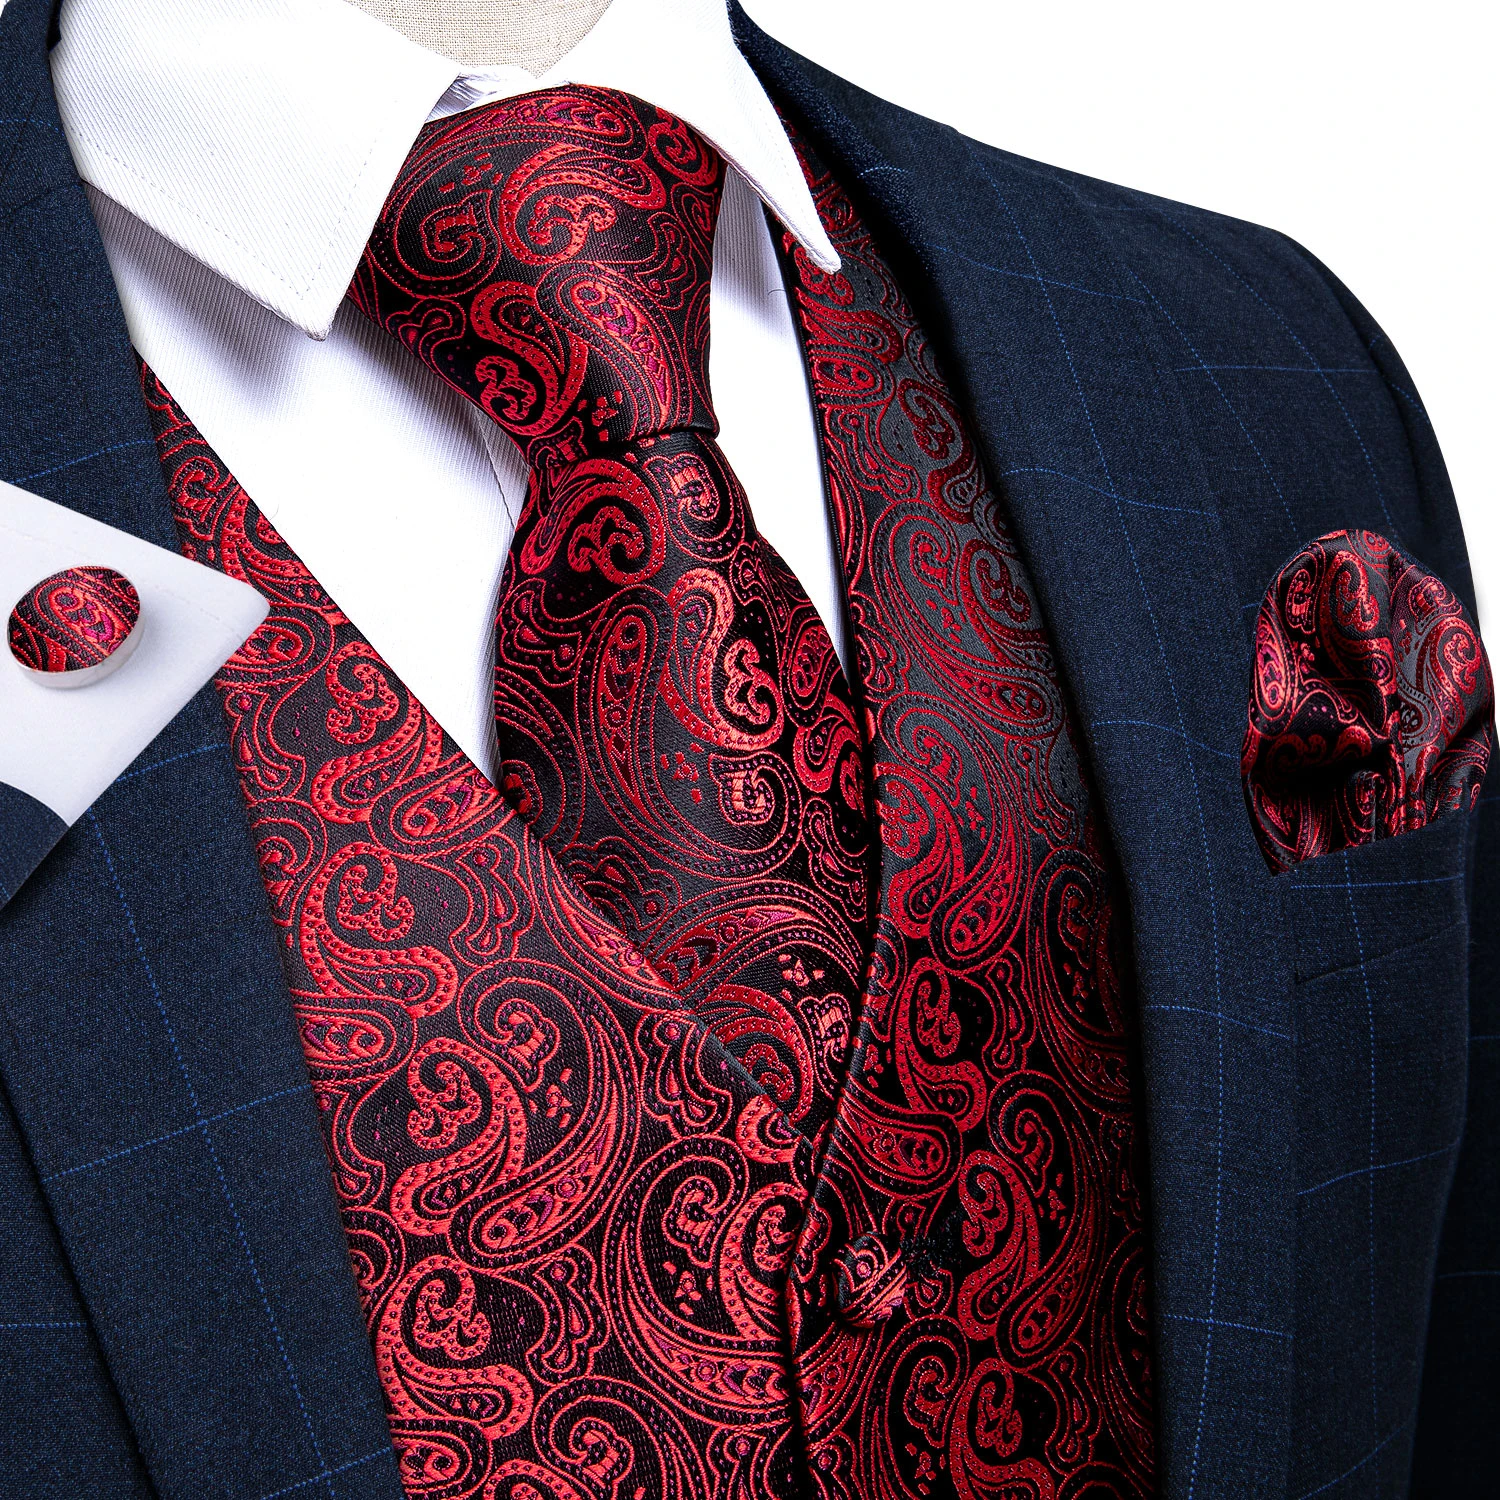 blazer for men wedding Luxury Red Paisley 100% Silk Formal Dress Vest Neck Tie Set Men's Wedding Party Vest Sleeveless Formal Business Jacket DiBanGu blazers